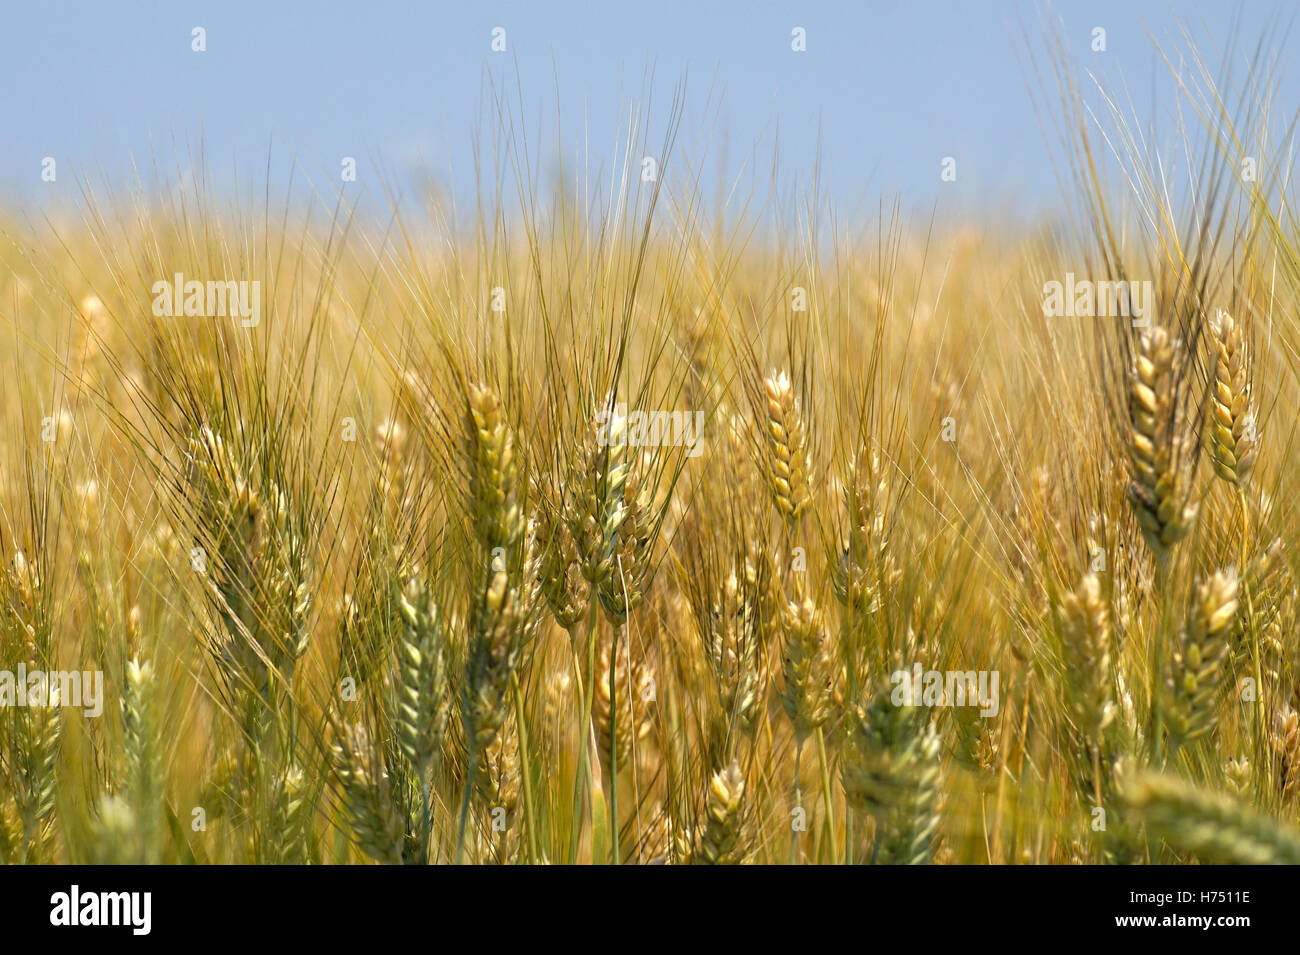 wheat, field, corn, ear, farm, summer, sky, grain, harvest, barley, nature, gold, plant, season, rural, grow, yellow, agricultur Stock Photo